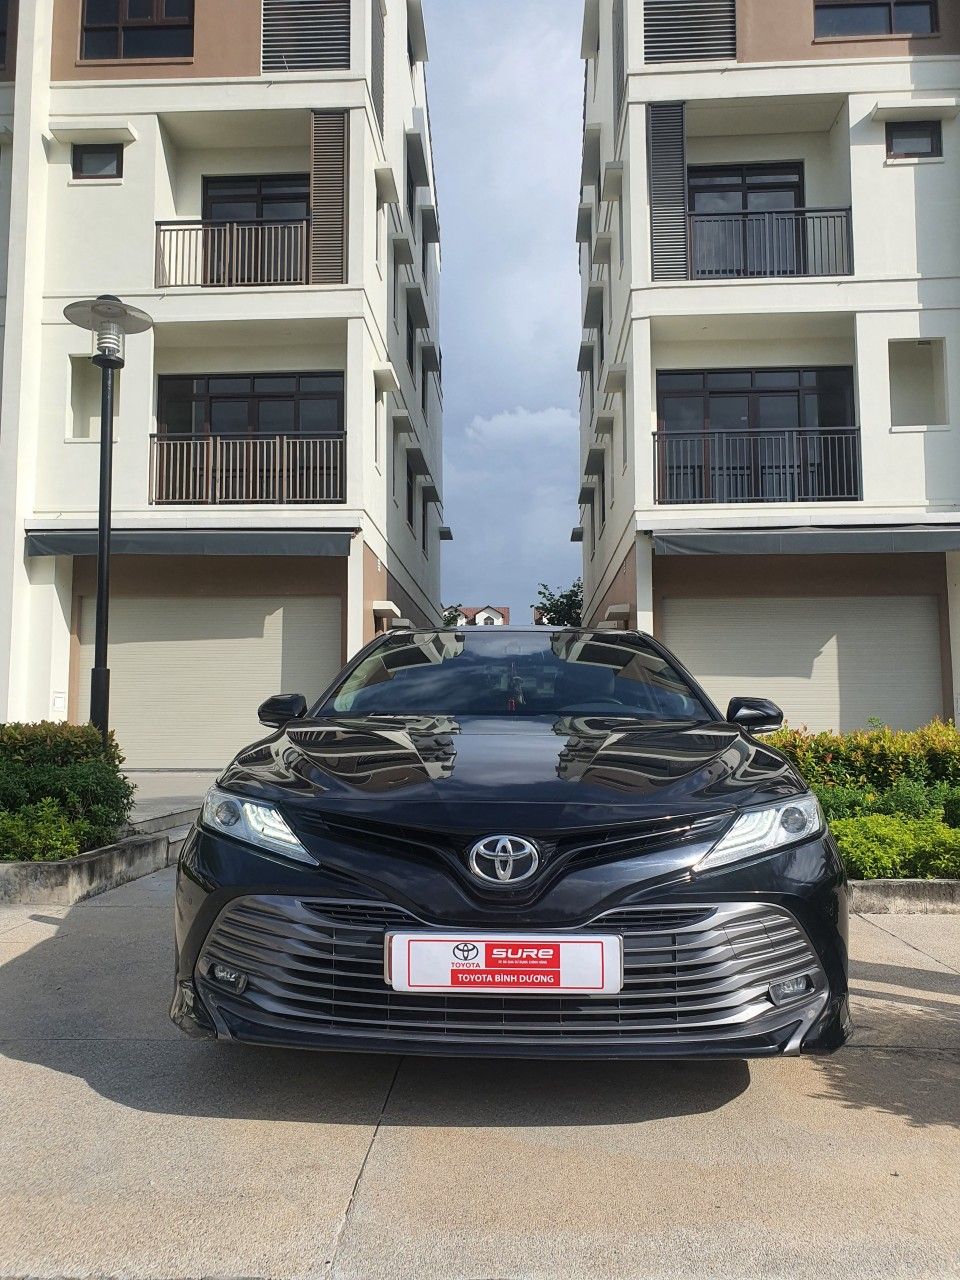 Toyota Camry 2.5Q 2019